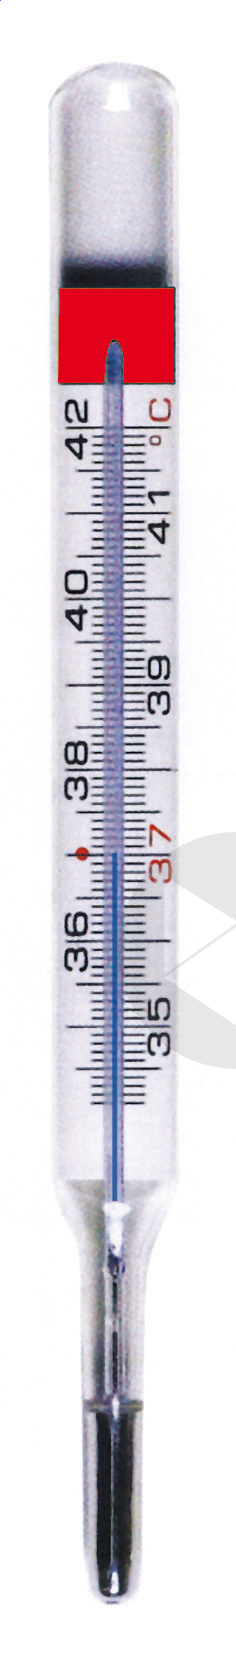 Thermometre Gallium Torm